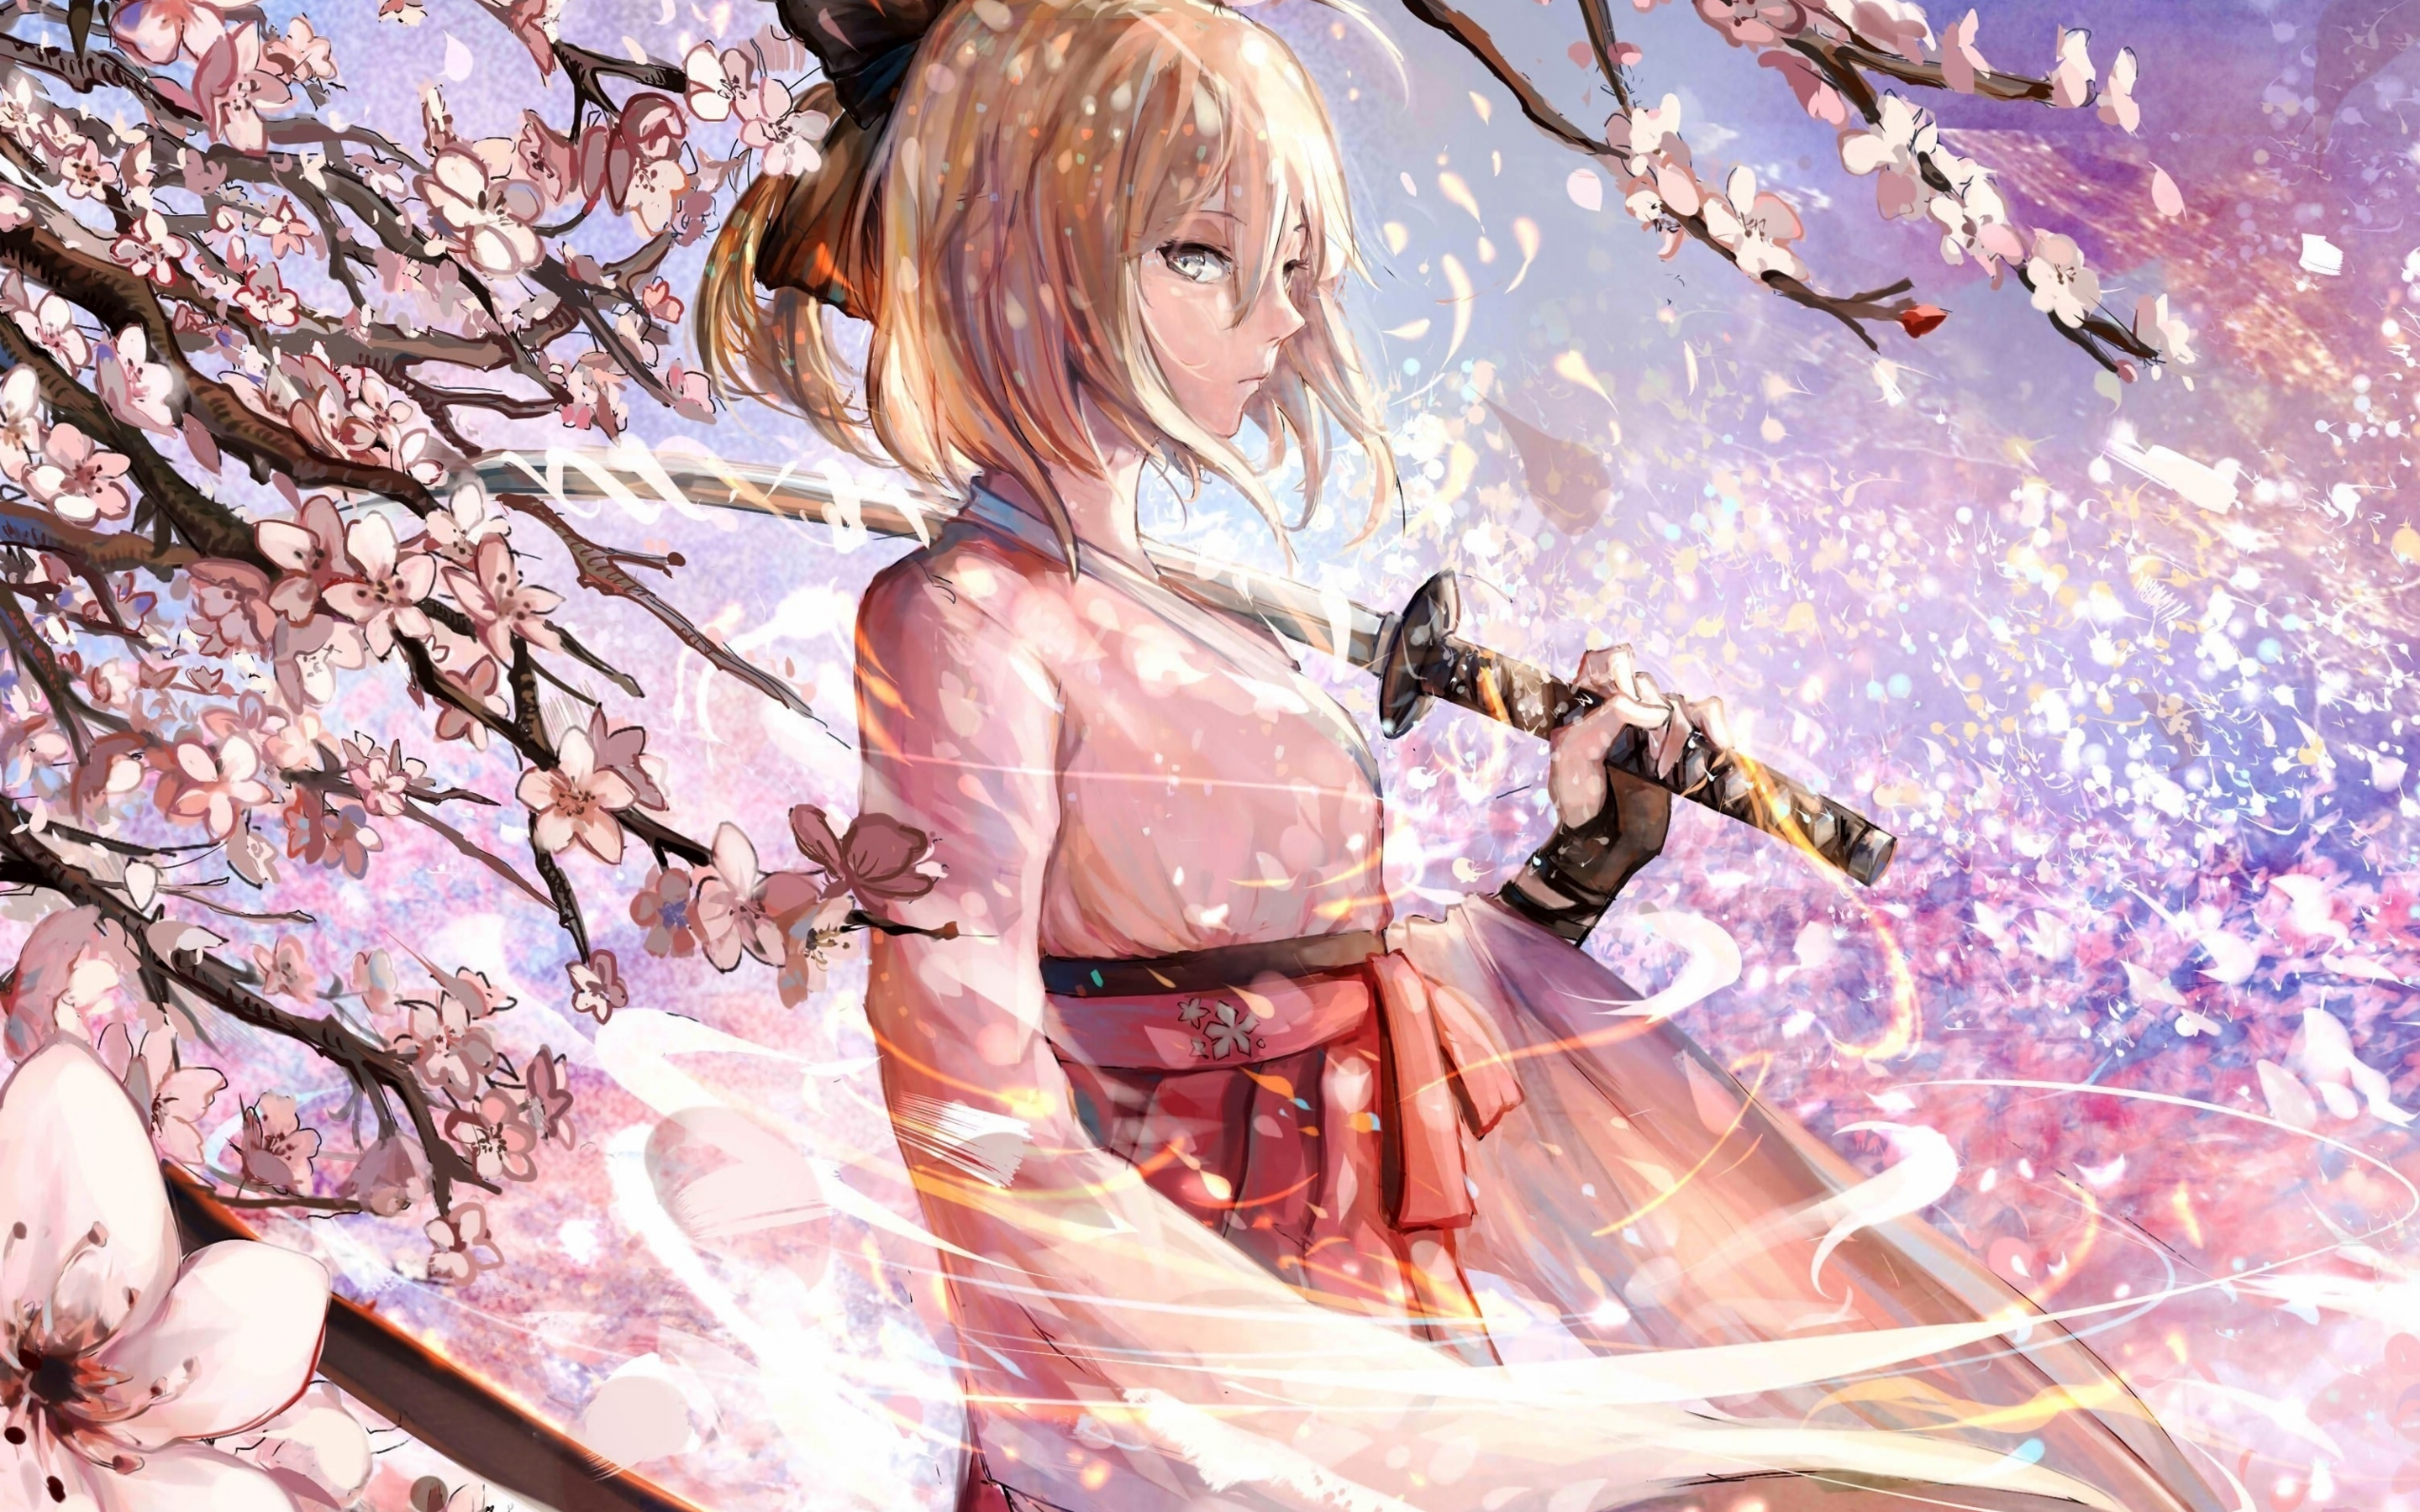 Download wallpaper 2880x1800 sakura saber, katana, cherry blossom, anime,  mac pro retaia 2880x1800 hd background, 4991